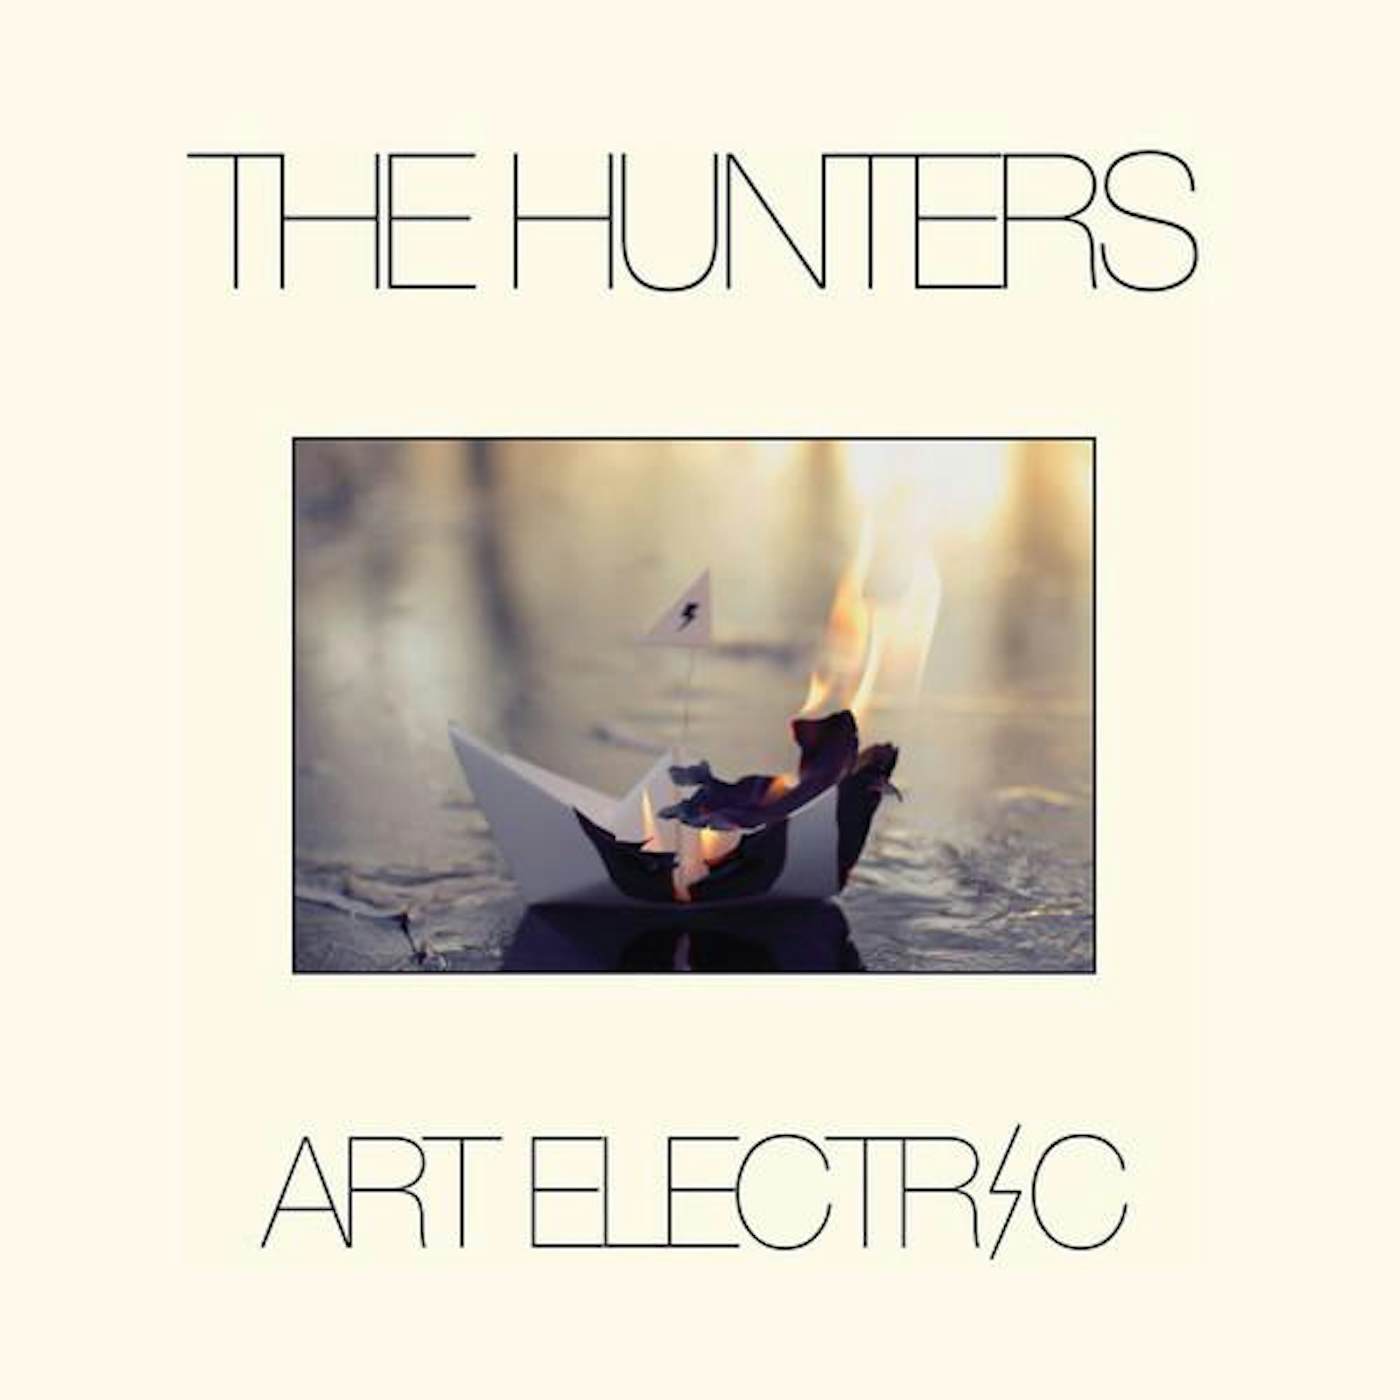 Hunters ART ELECTRIC Vinyl Record